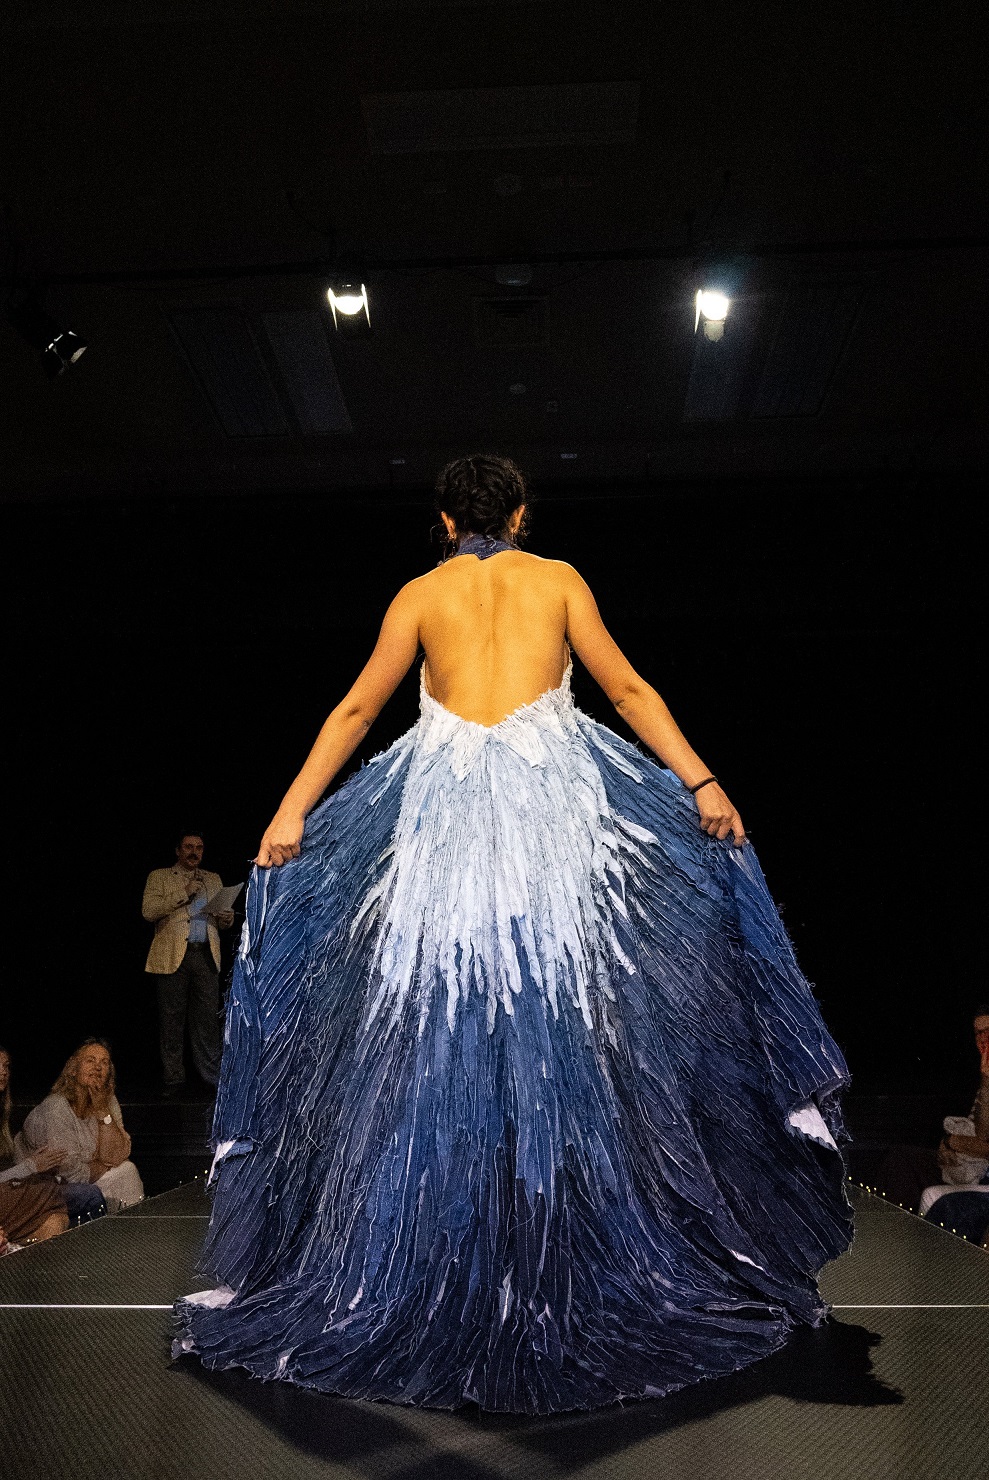 Designer Maria Fadden created this Cinderella gown from denim scraps. Photos: Orla O'Muiri